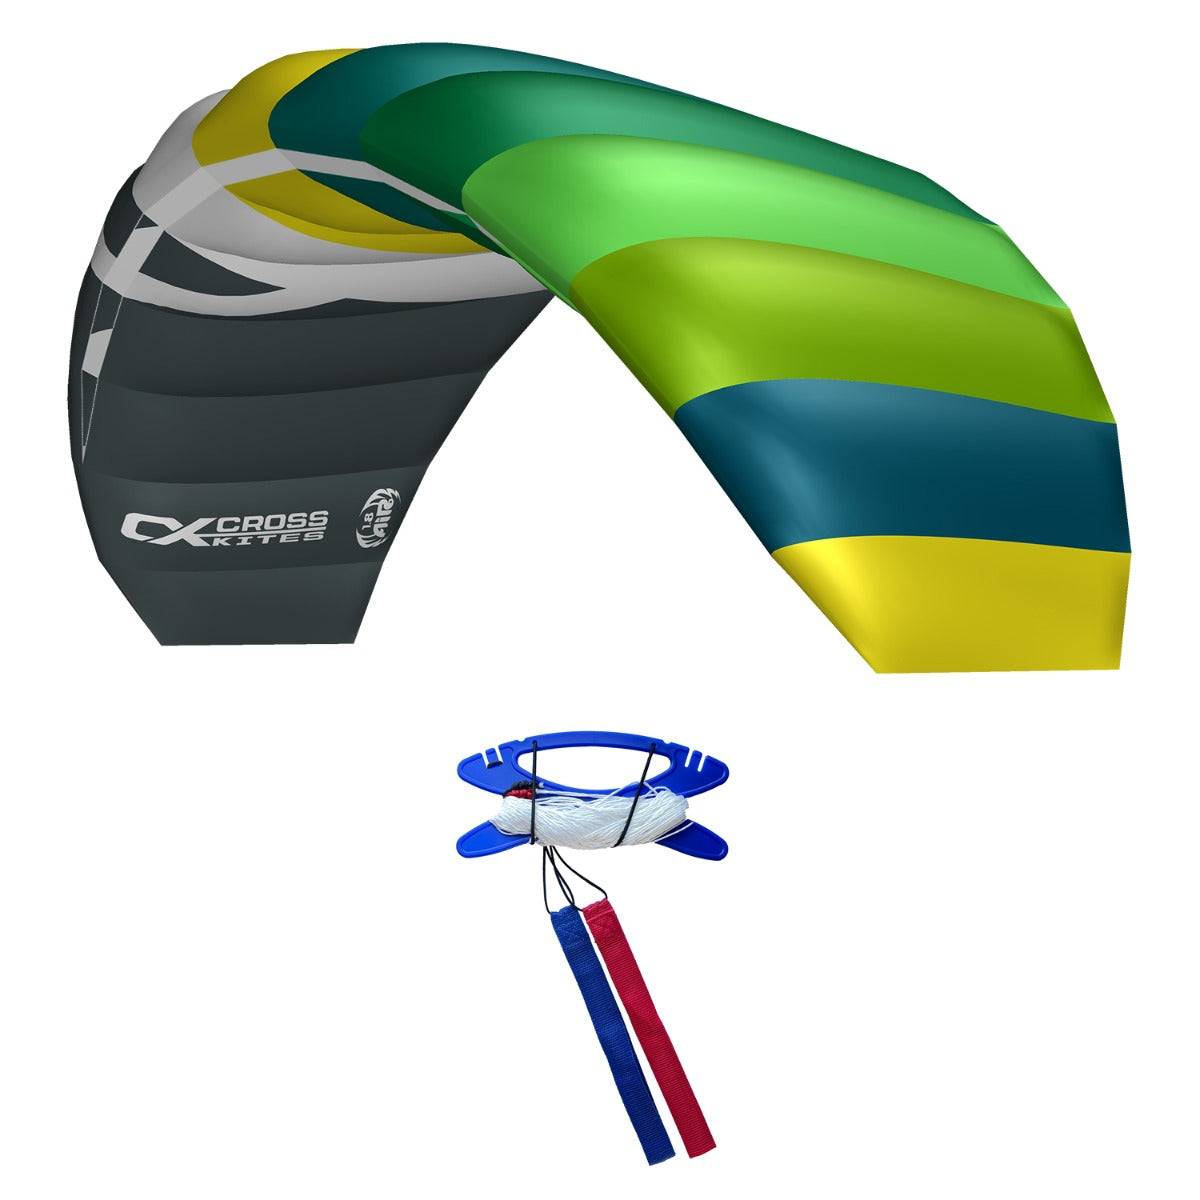 CrossKites Lenkmatte CrossKites Air 1.8 Green-Yellow Ready to Fly Lenkmatte 2 Leiner Kite Matte